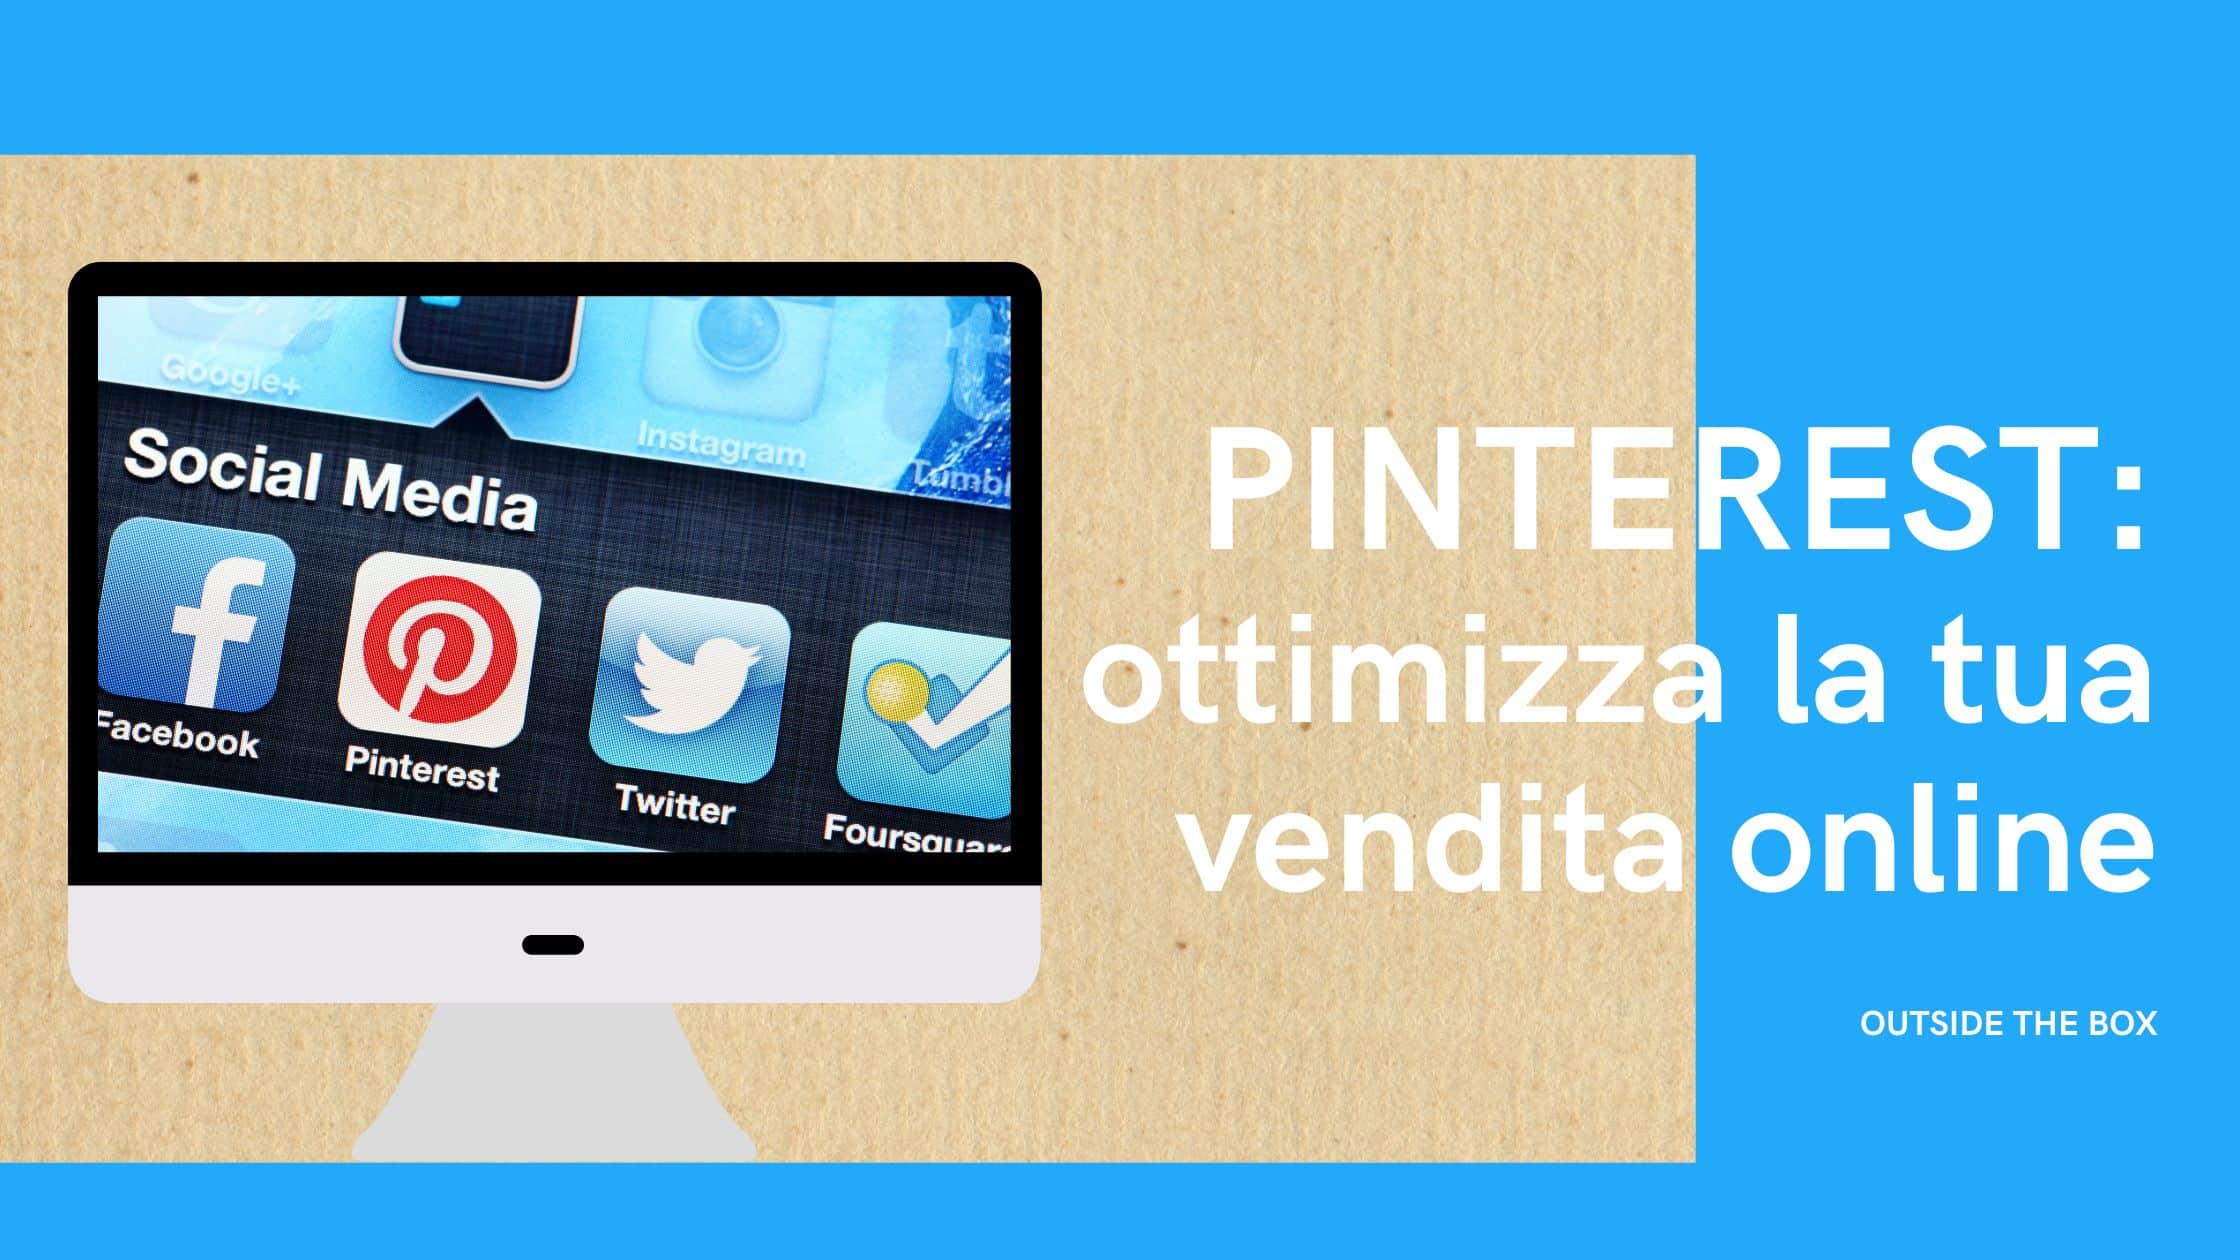 Pinterest: ottimizza la vendita online